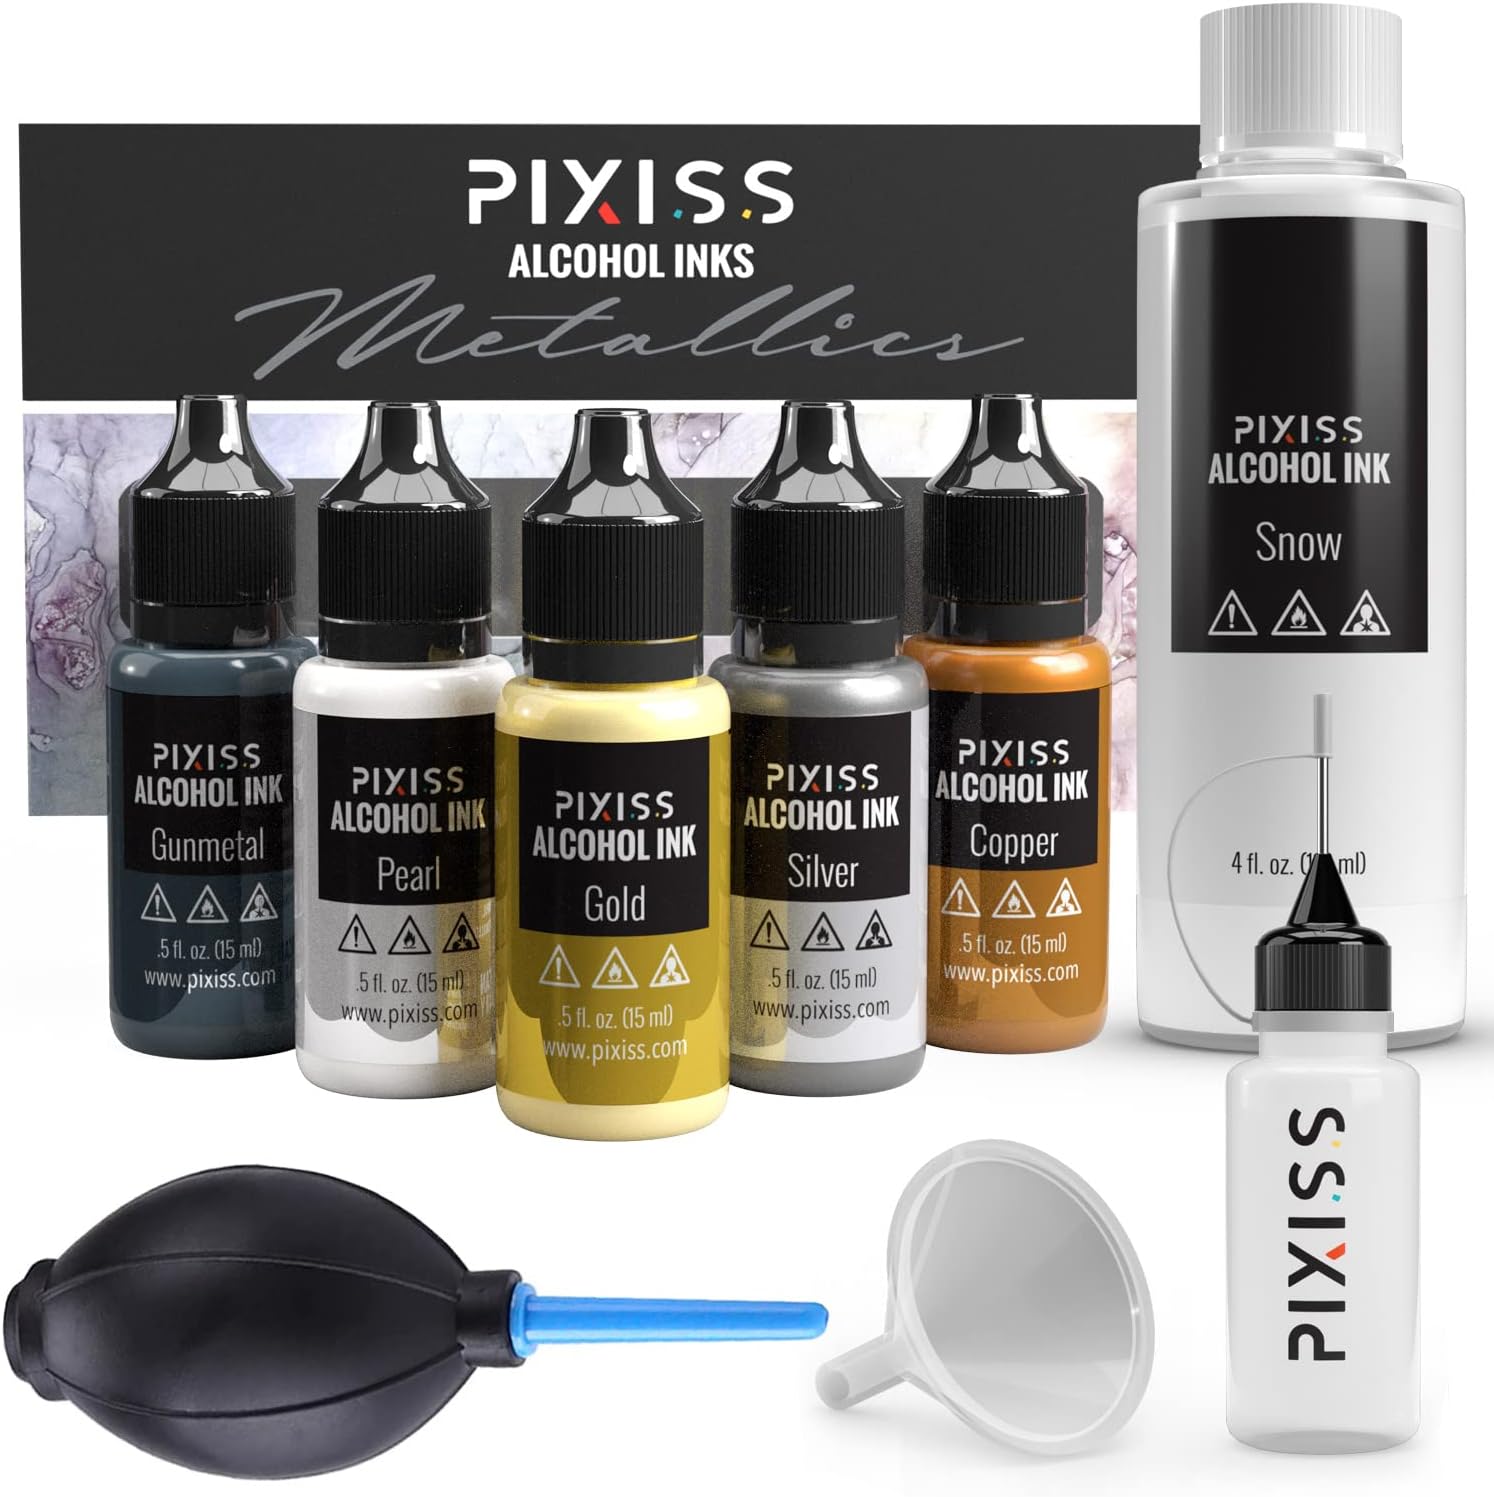 Pixiss Metallic Alcohol Ink 4 oz. - Silver